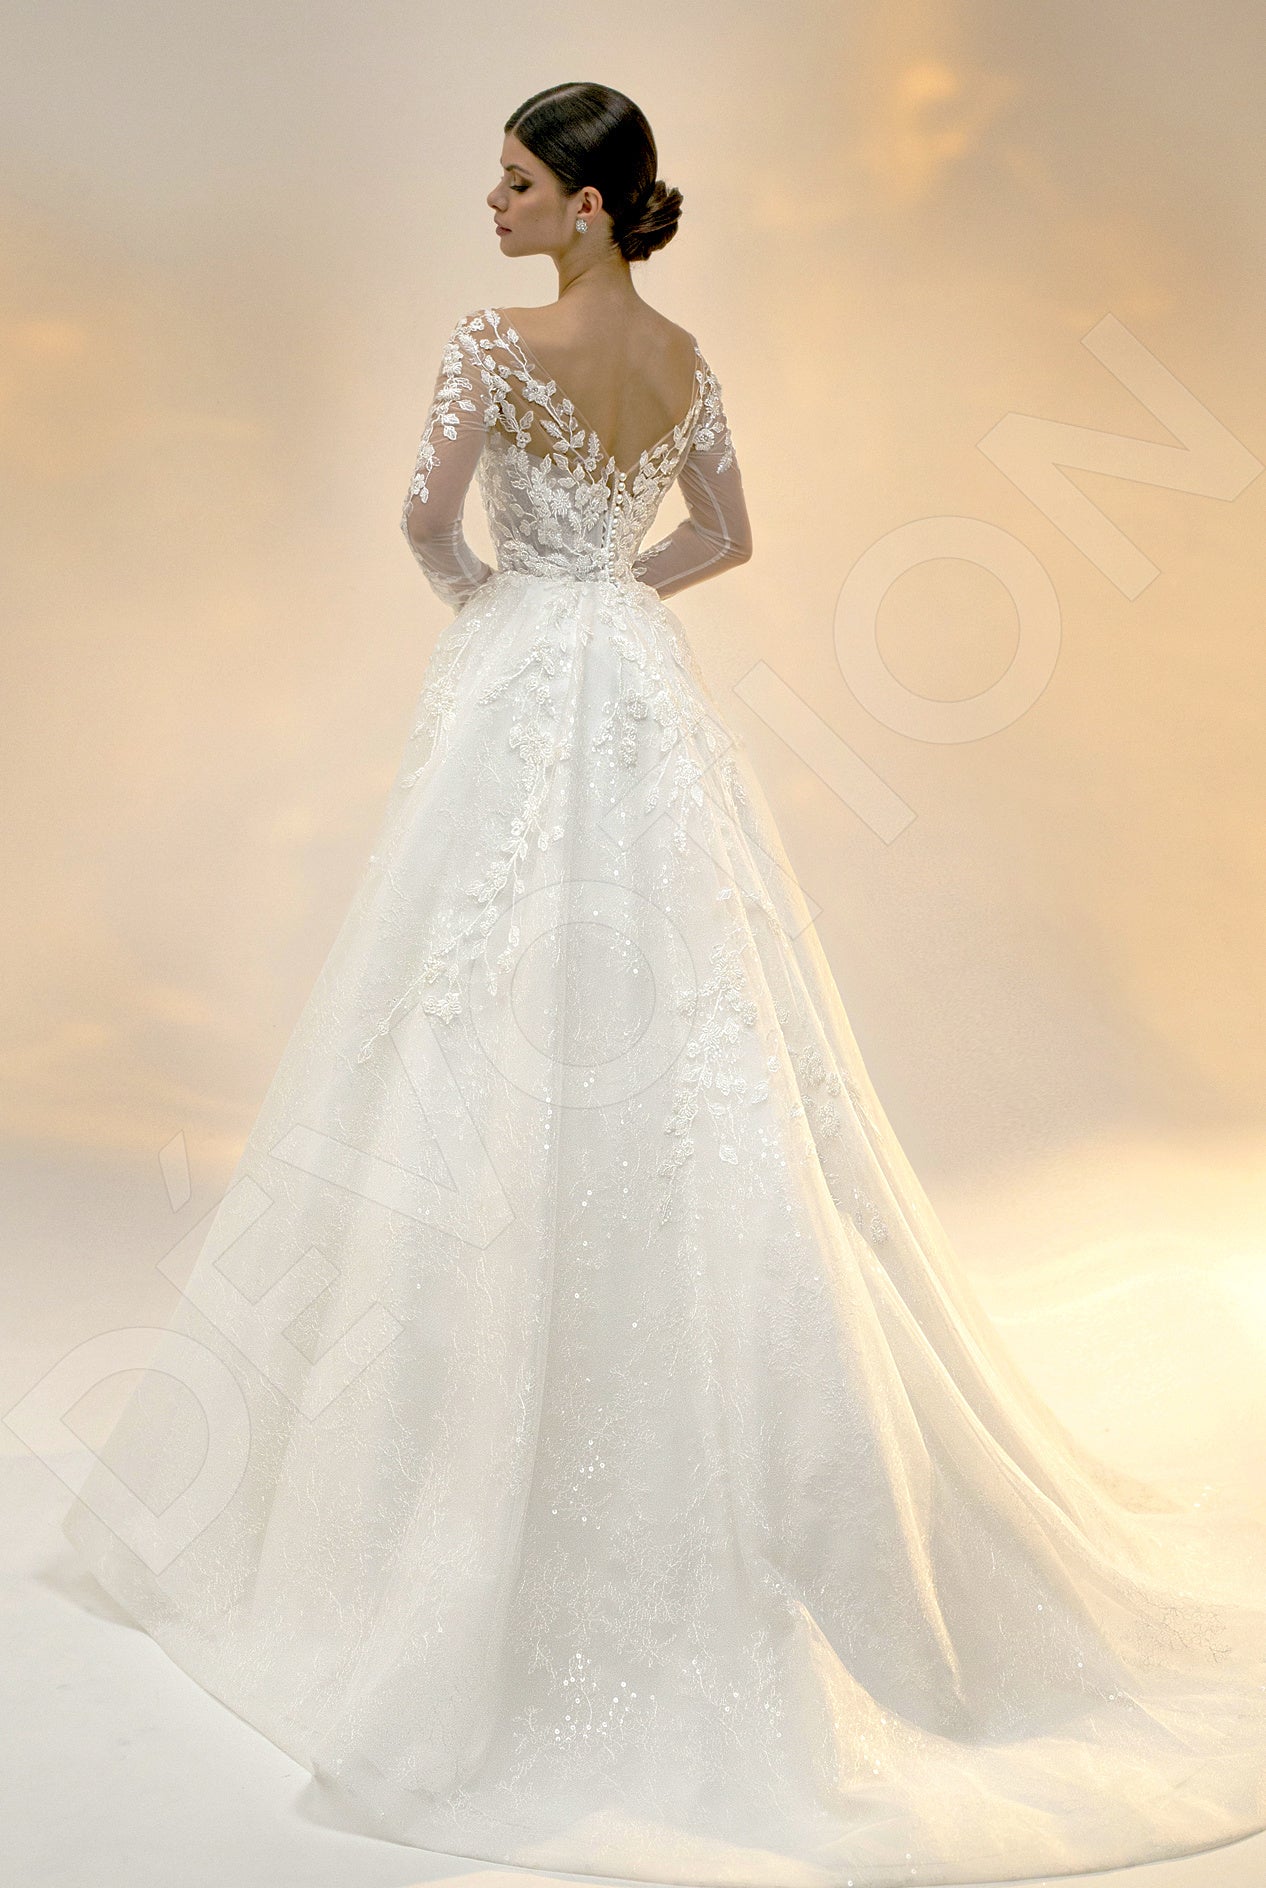 Lizzie Princess/Ball Gown Illusion Light Ivory Wedding dress